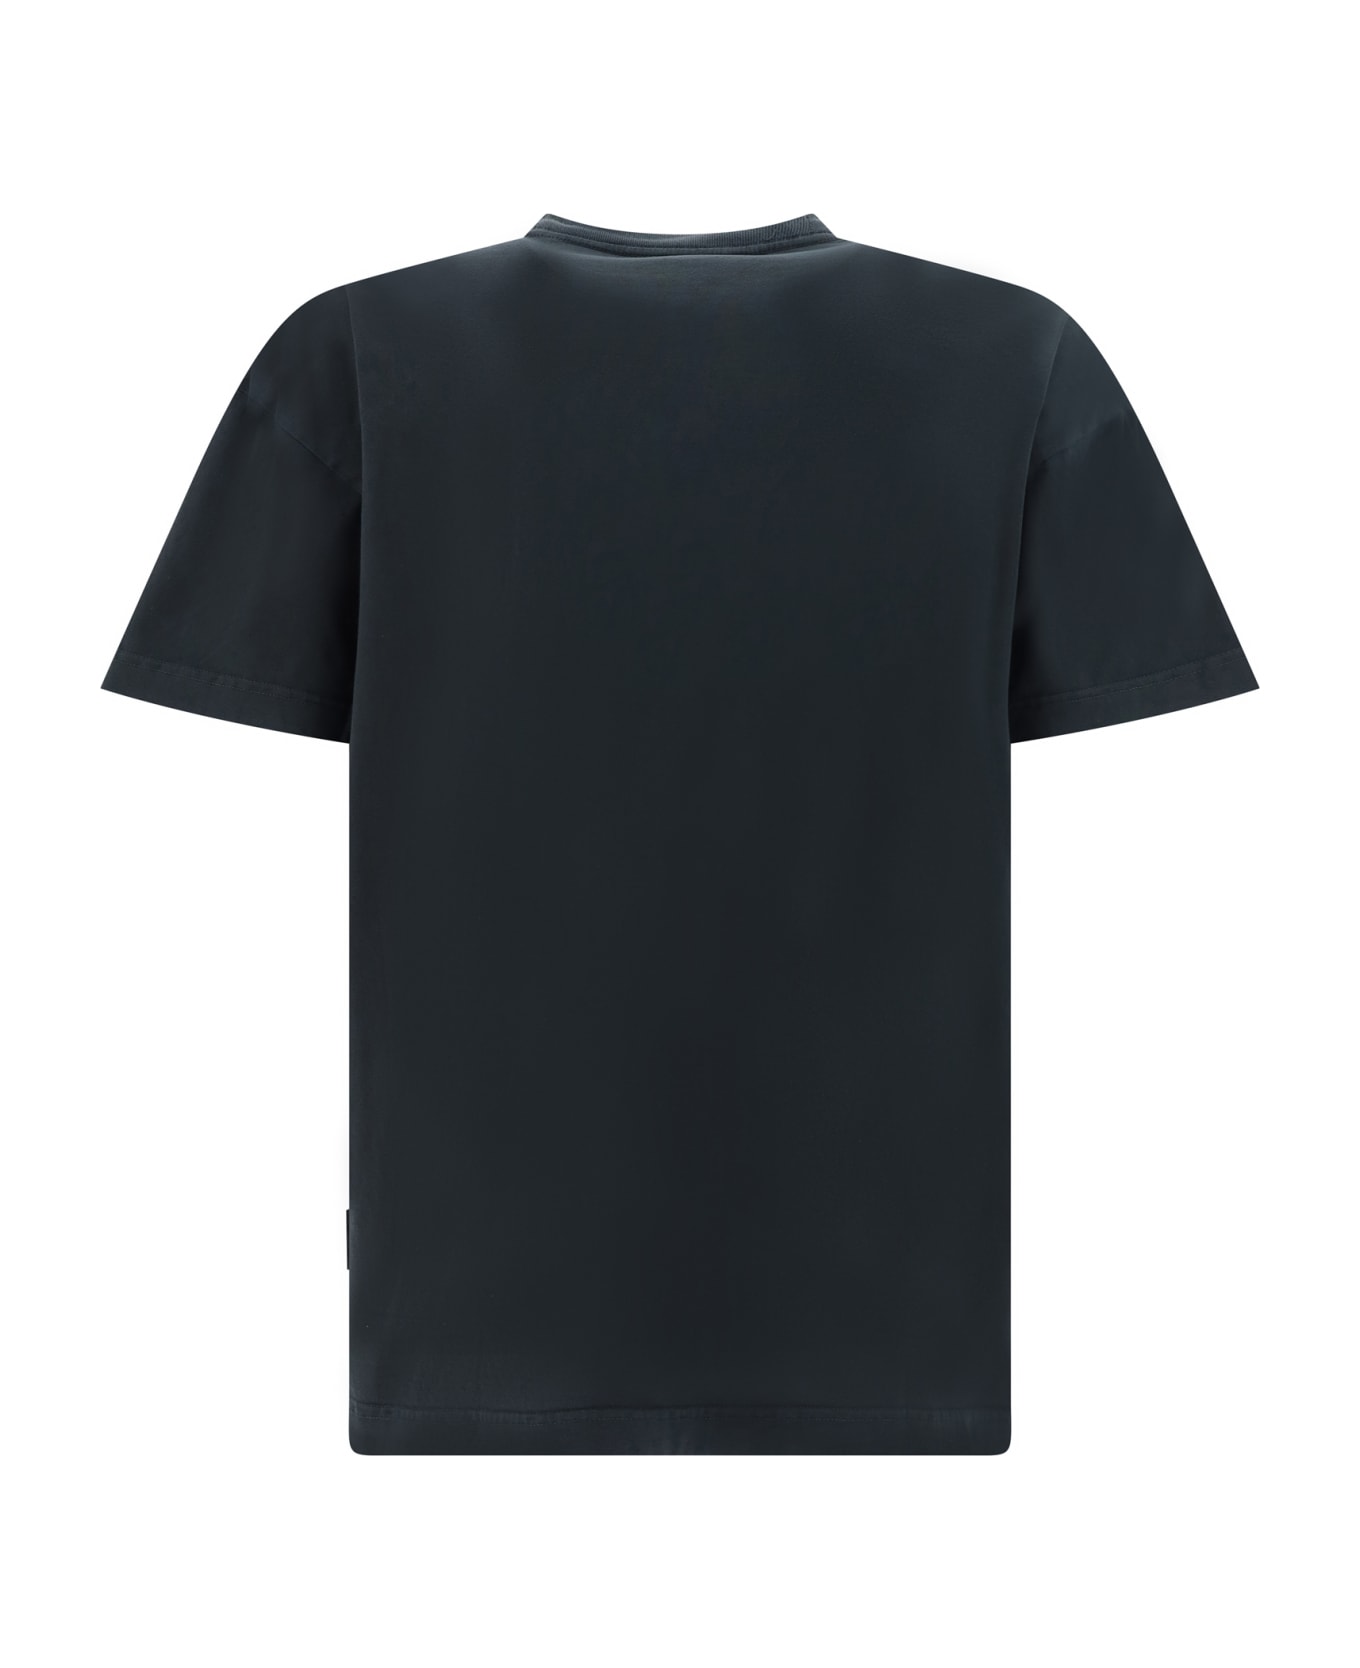 Palm Angels Pa City Washed T-shirt - Black Tシャツ